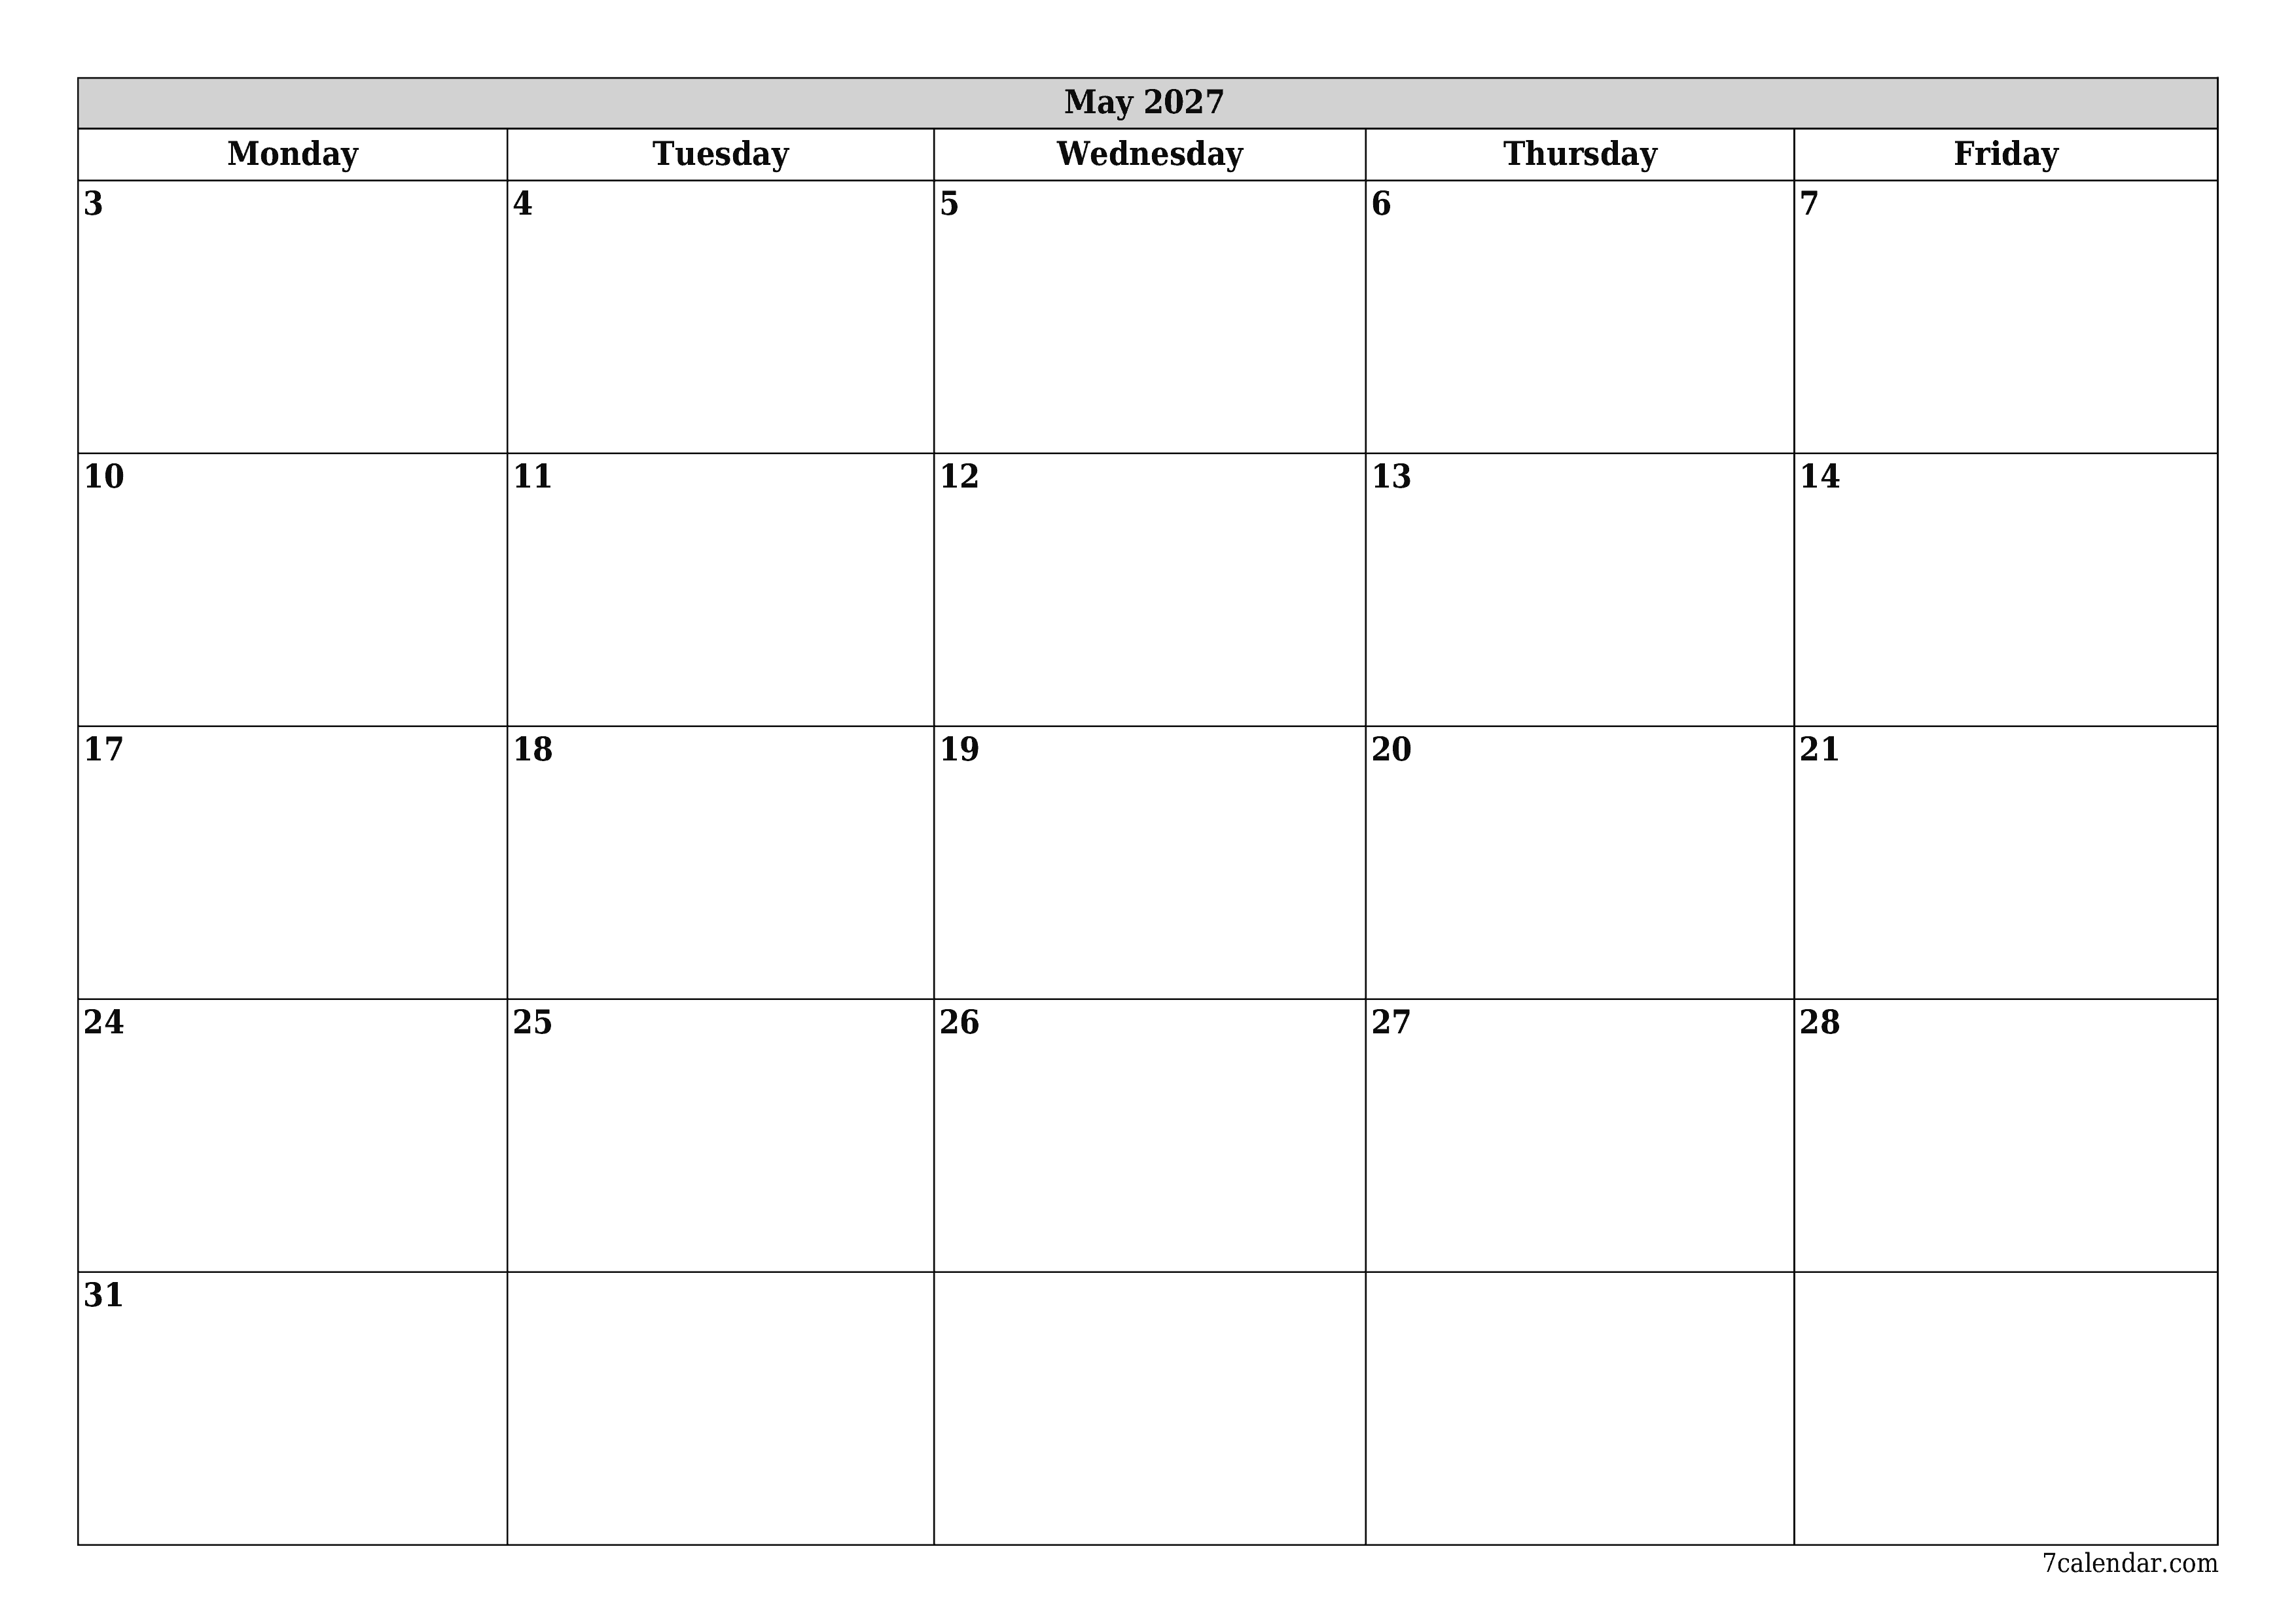 Blank calendar May 2027